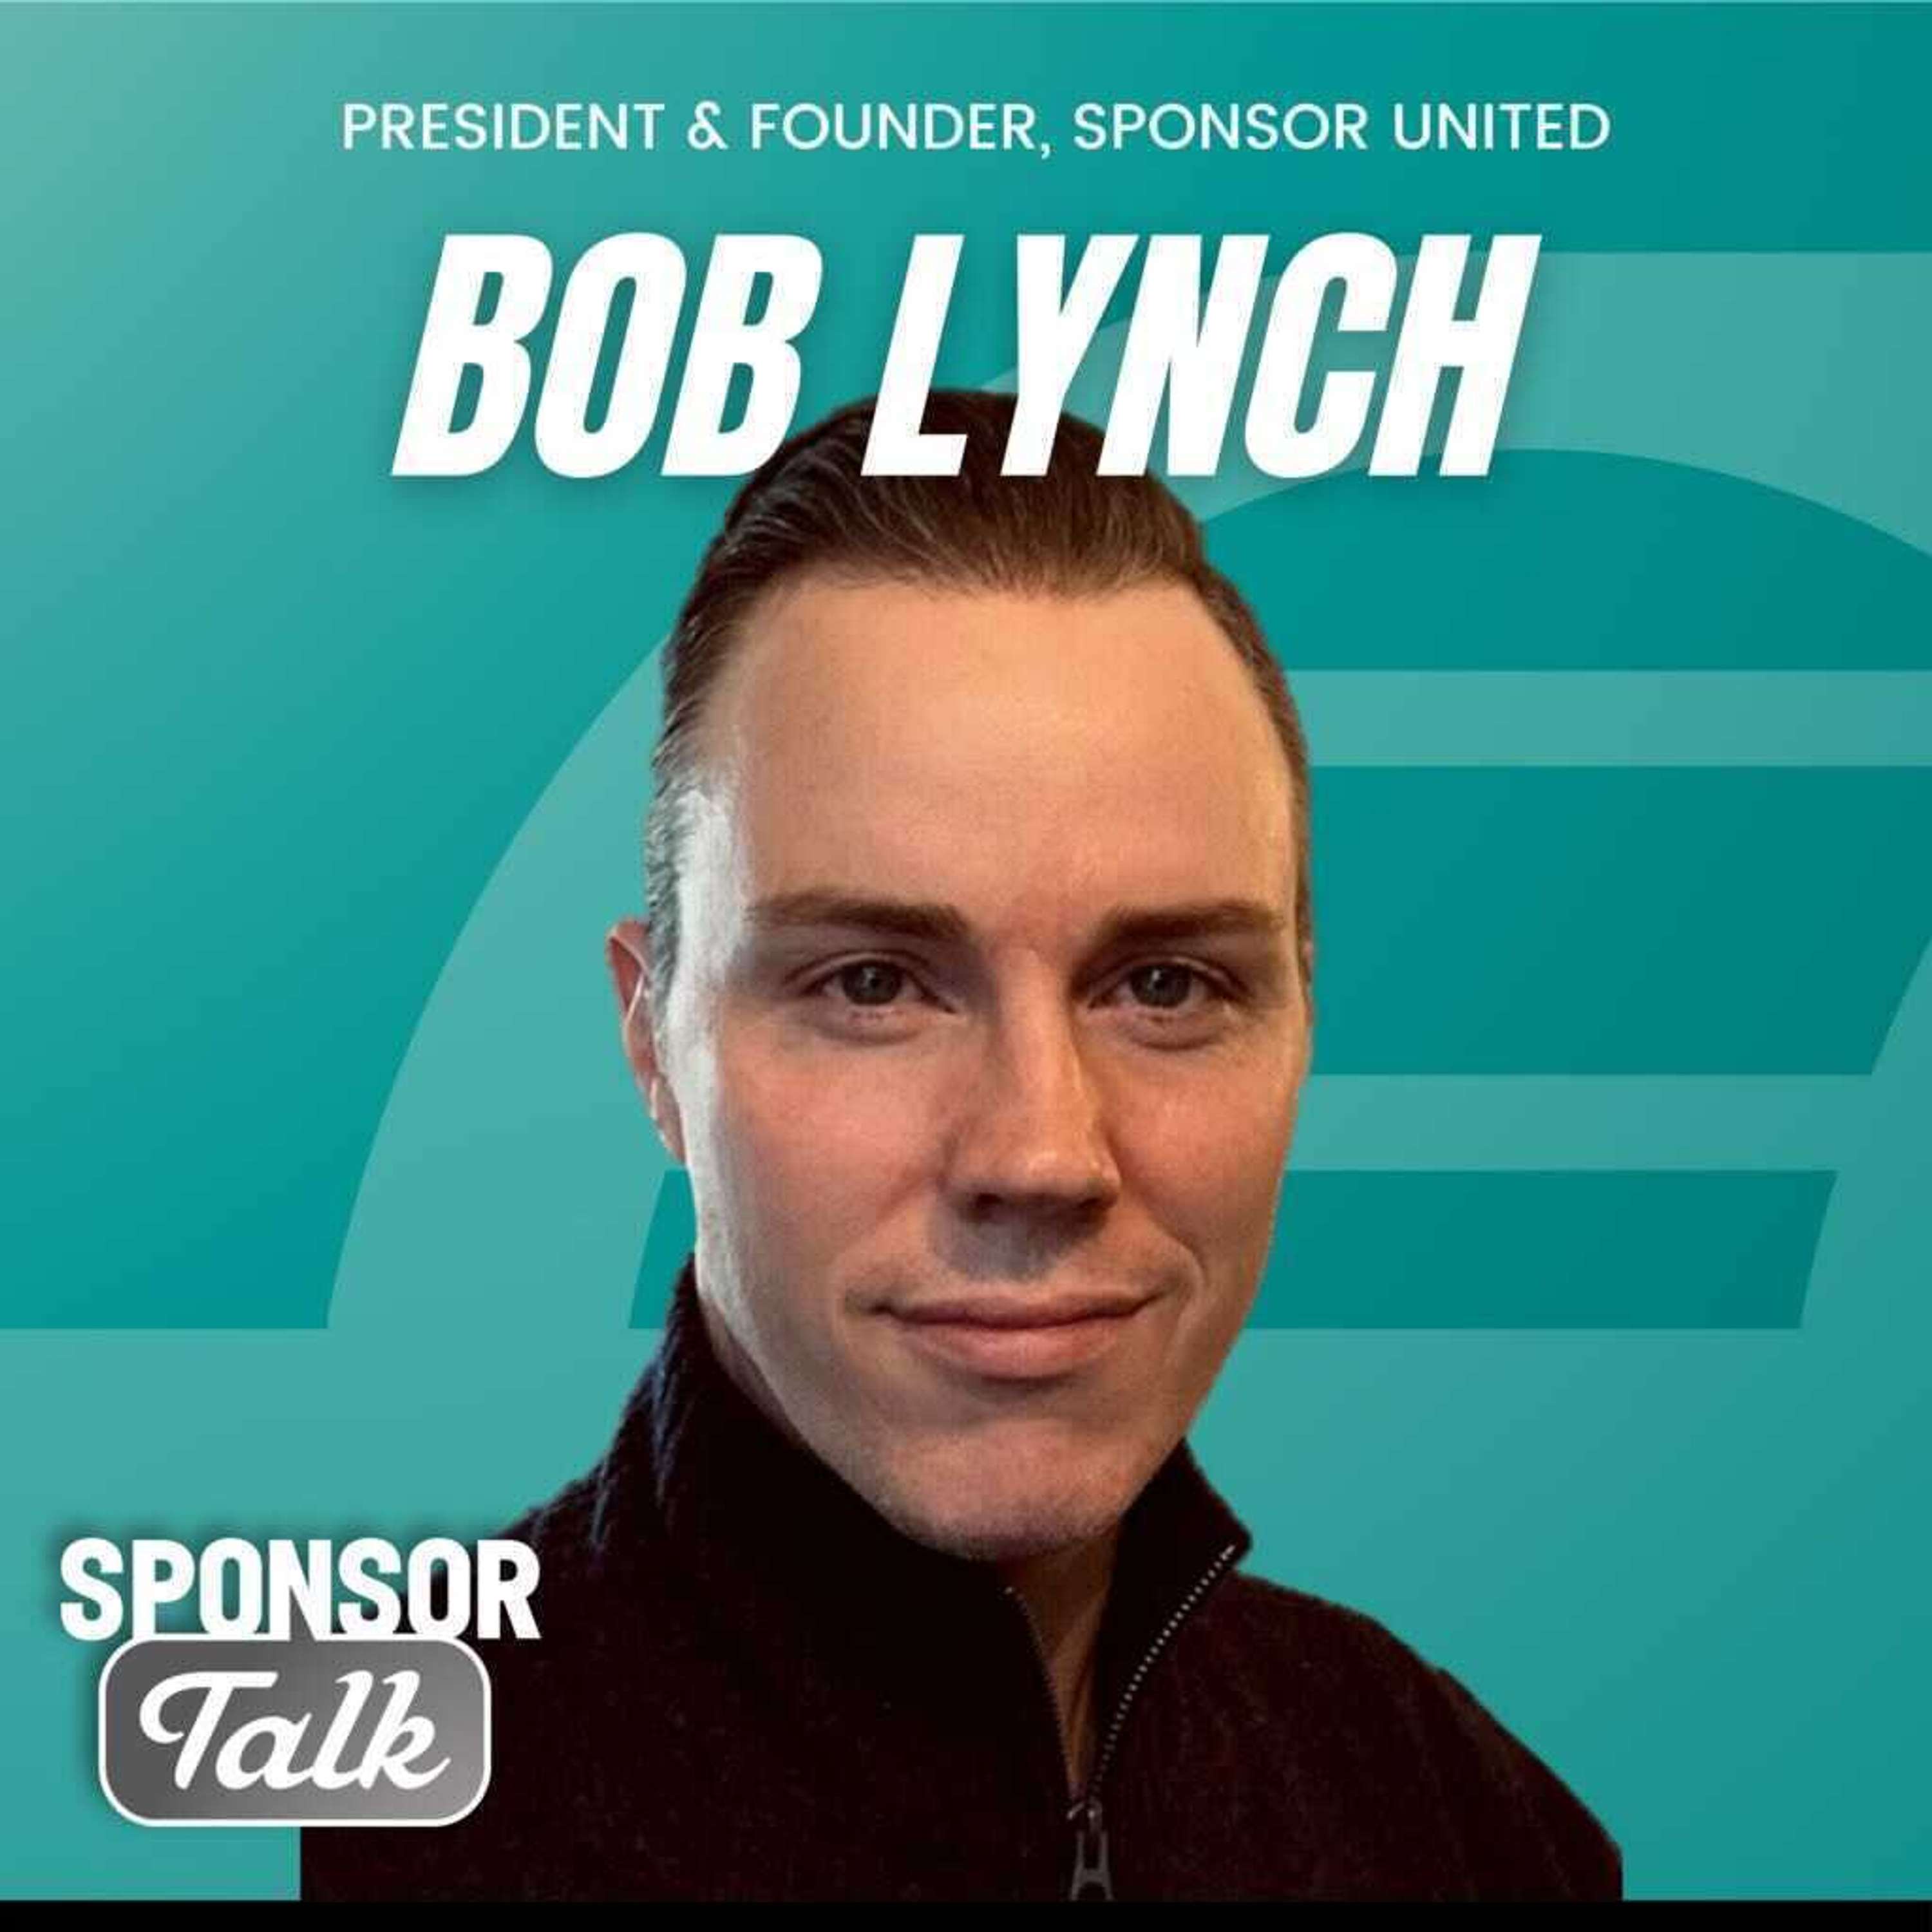 Bob Lynch | President & Founder, Sponsor United